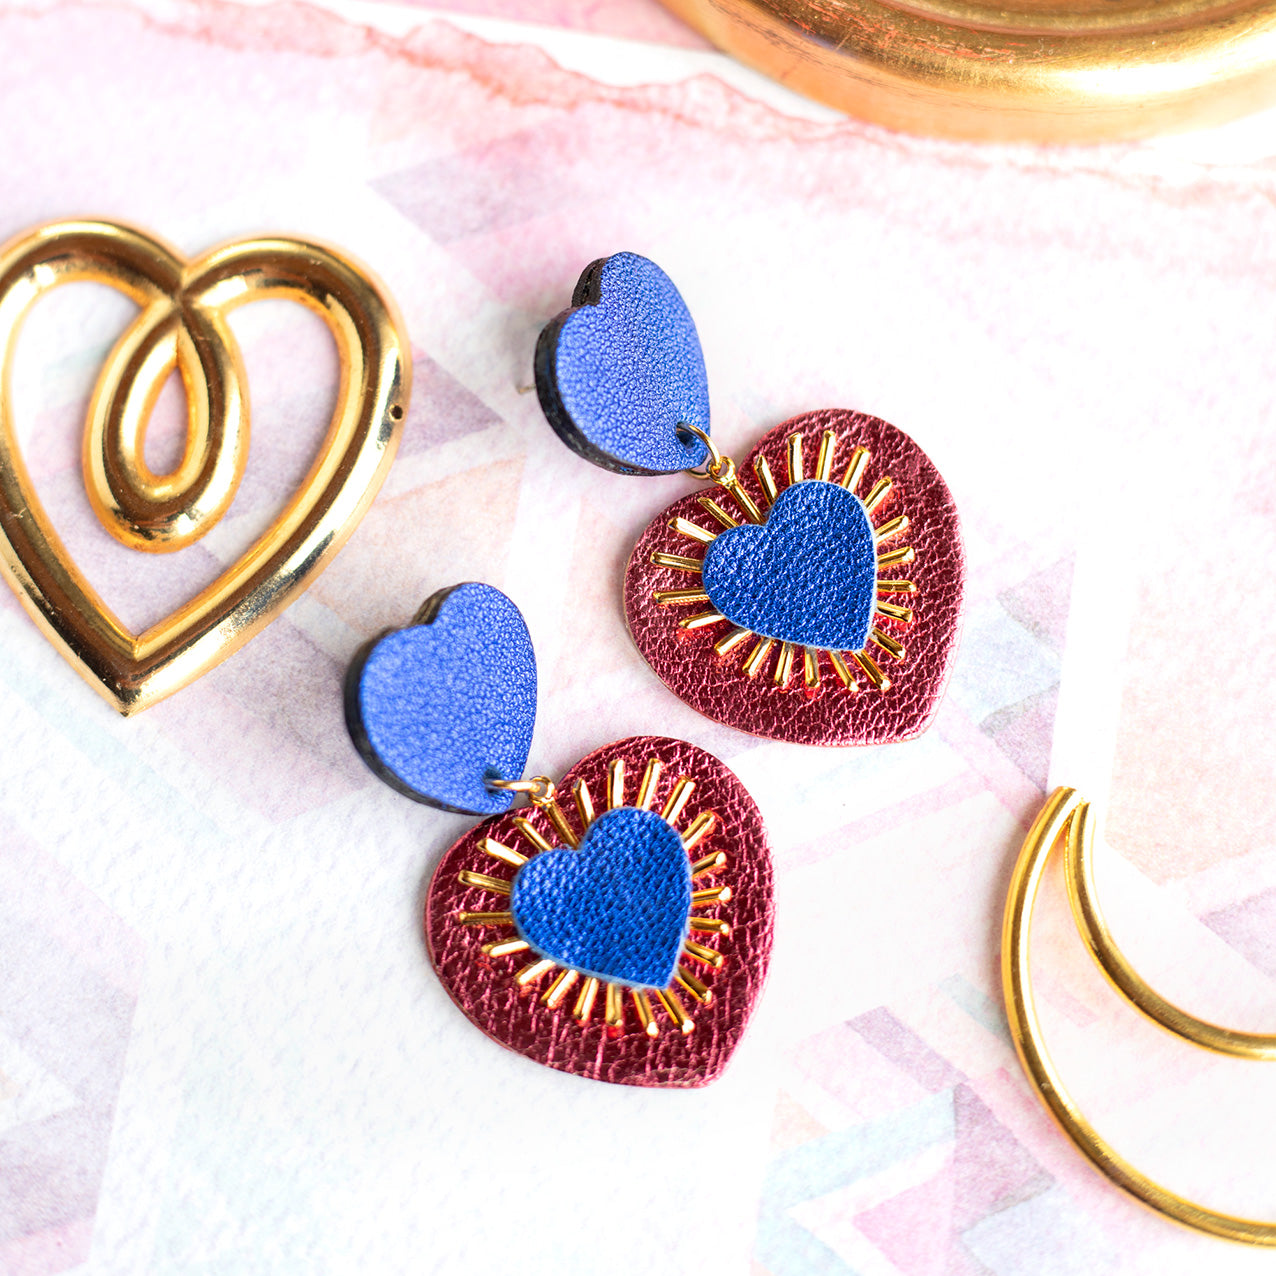 Sacré Coeur earrings in ultramarine blue and metallic raspberry pink leather